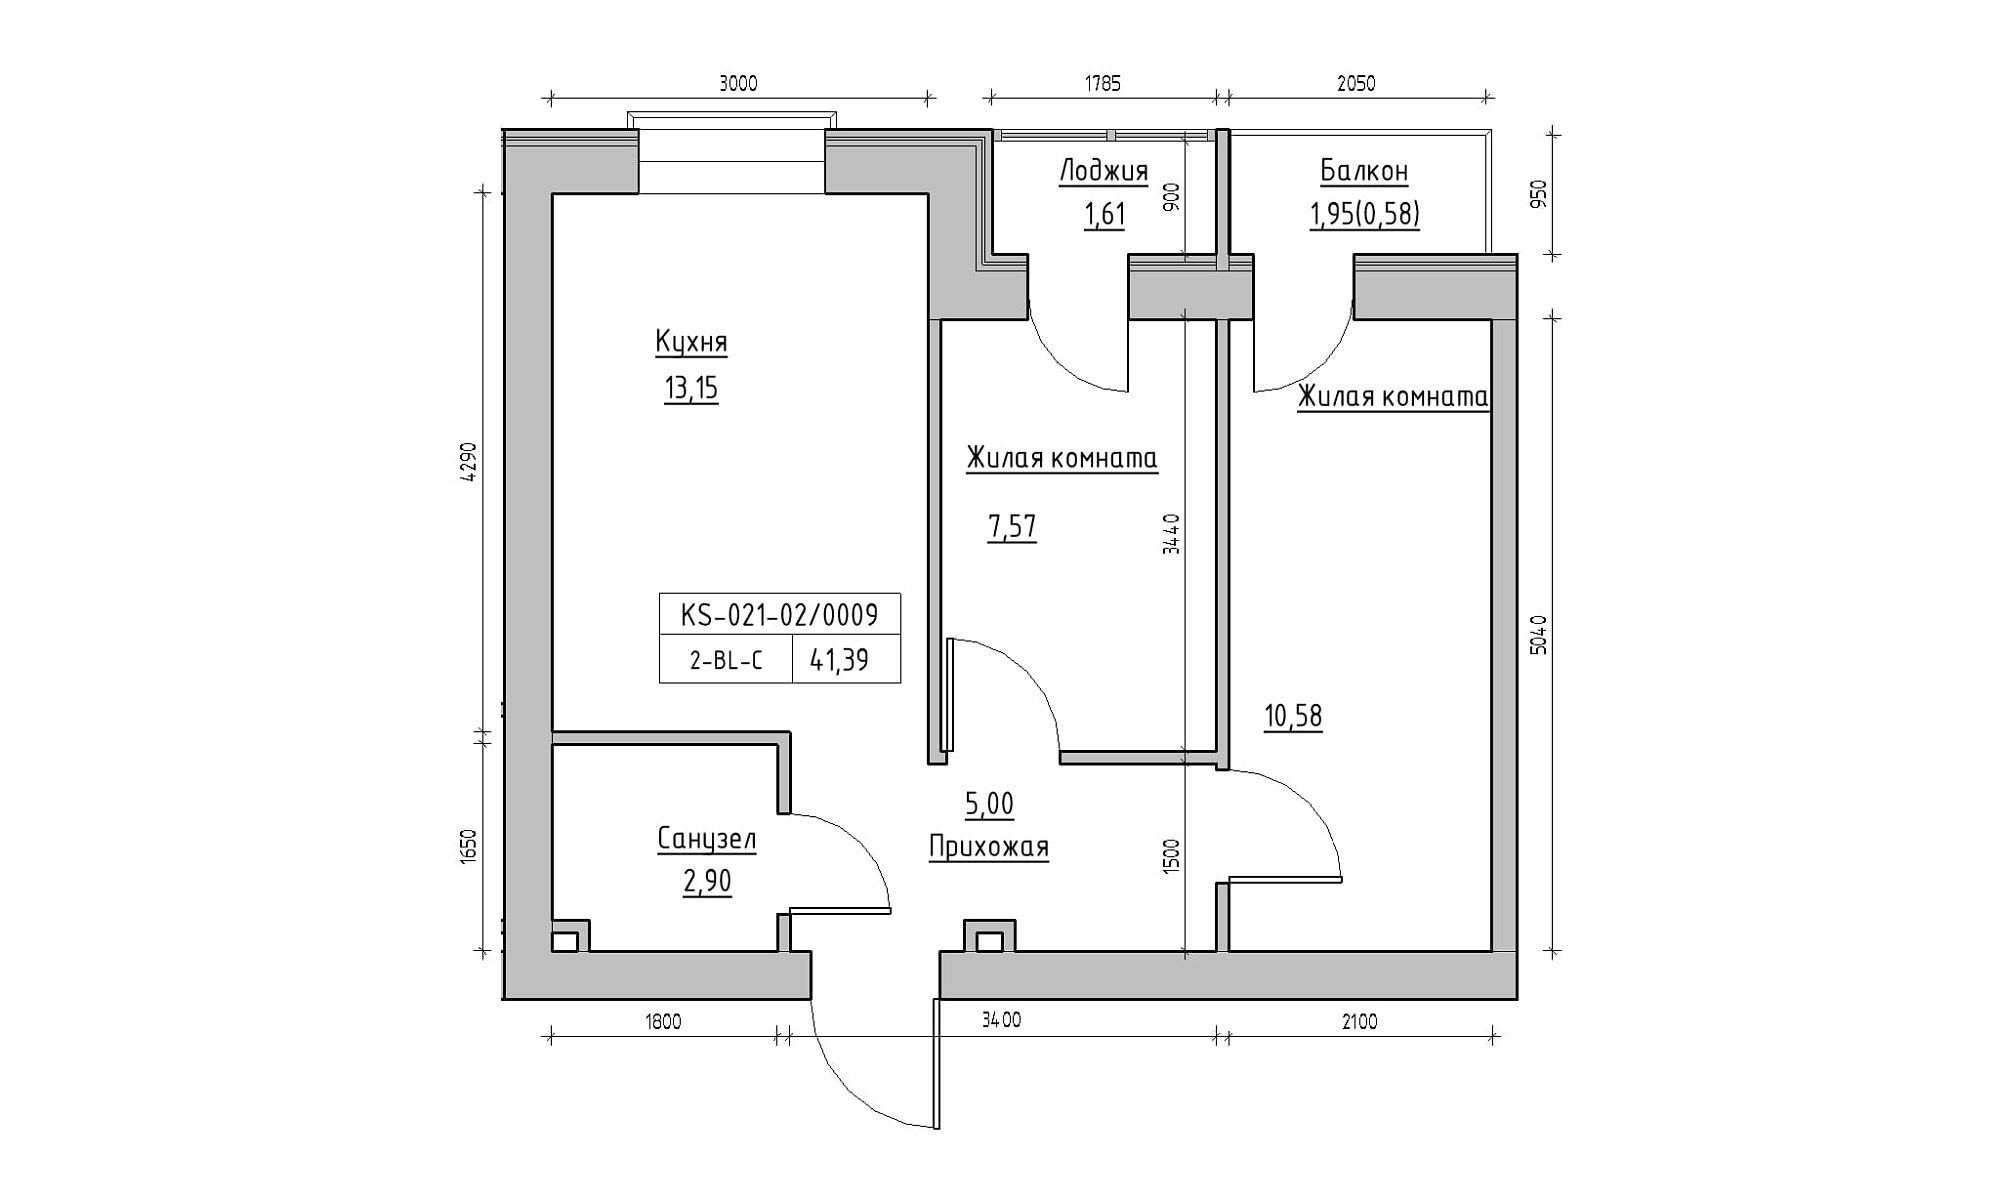 Planning 2-rm flats area 41.39m2, KS-021-02/0009.